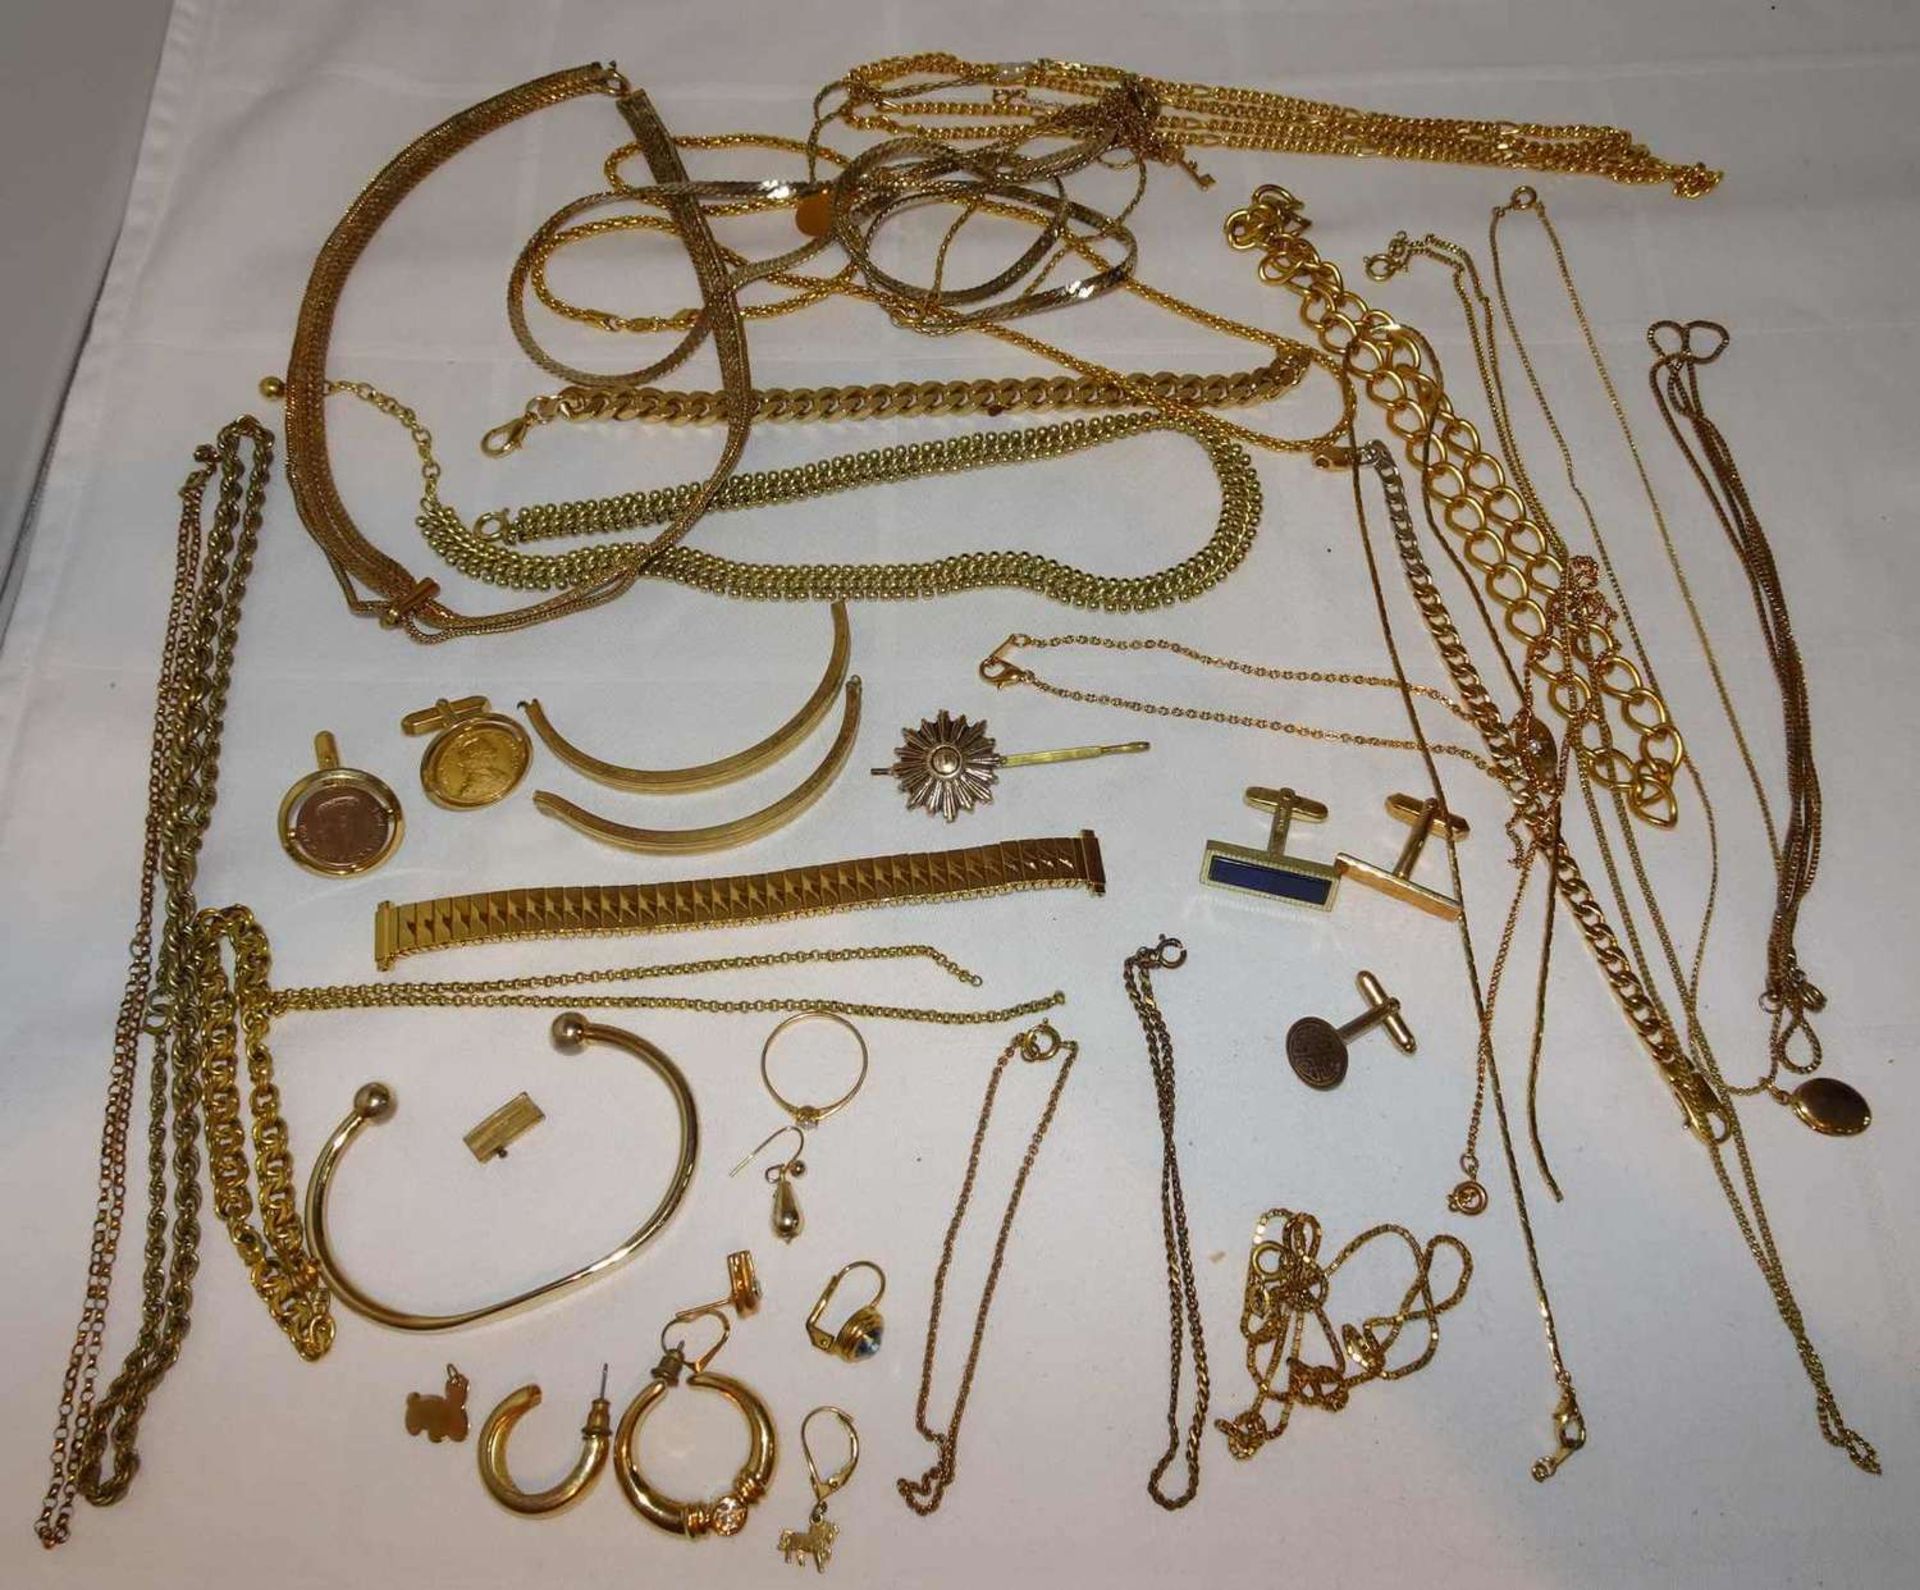 Lot goldfarbener Modeschmuck, dabei Ketten, Armreif, etc. Lot of gold-colored fashion jewelry,